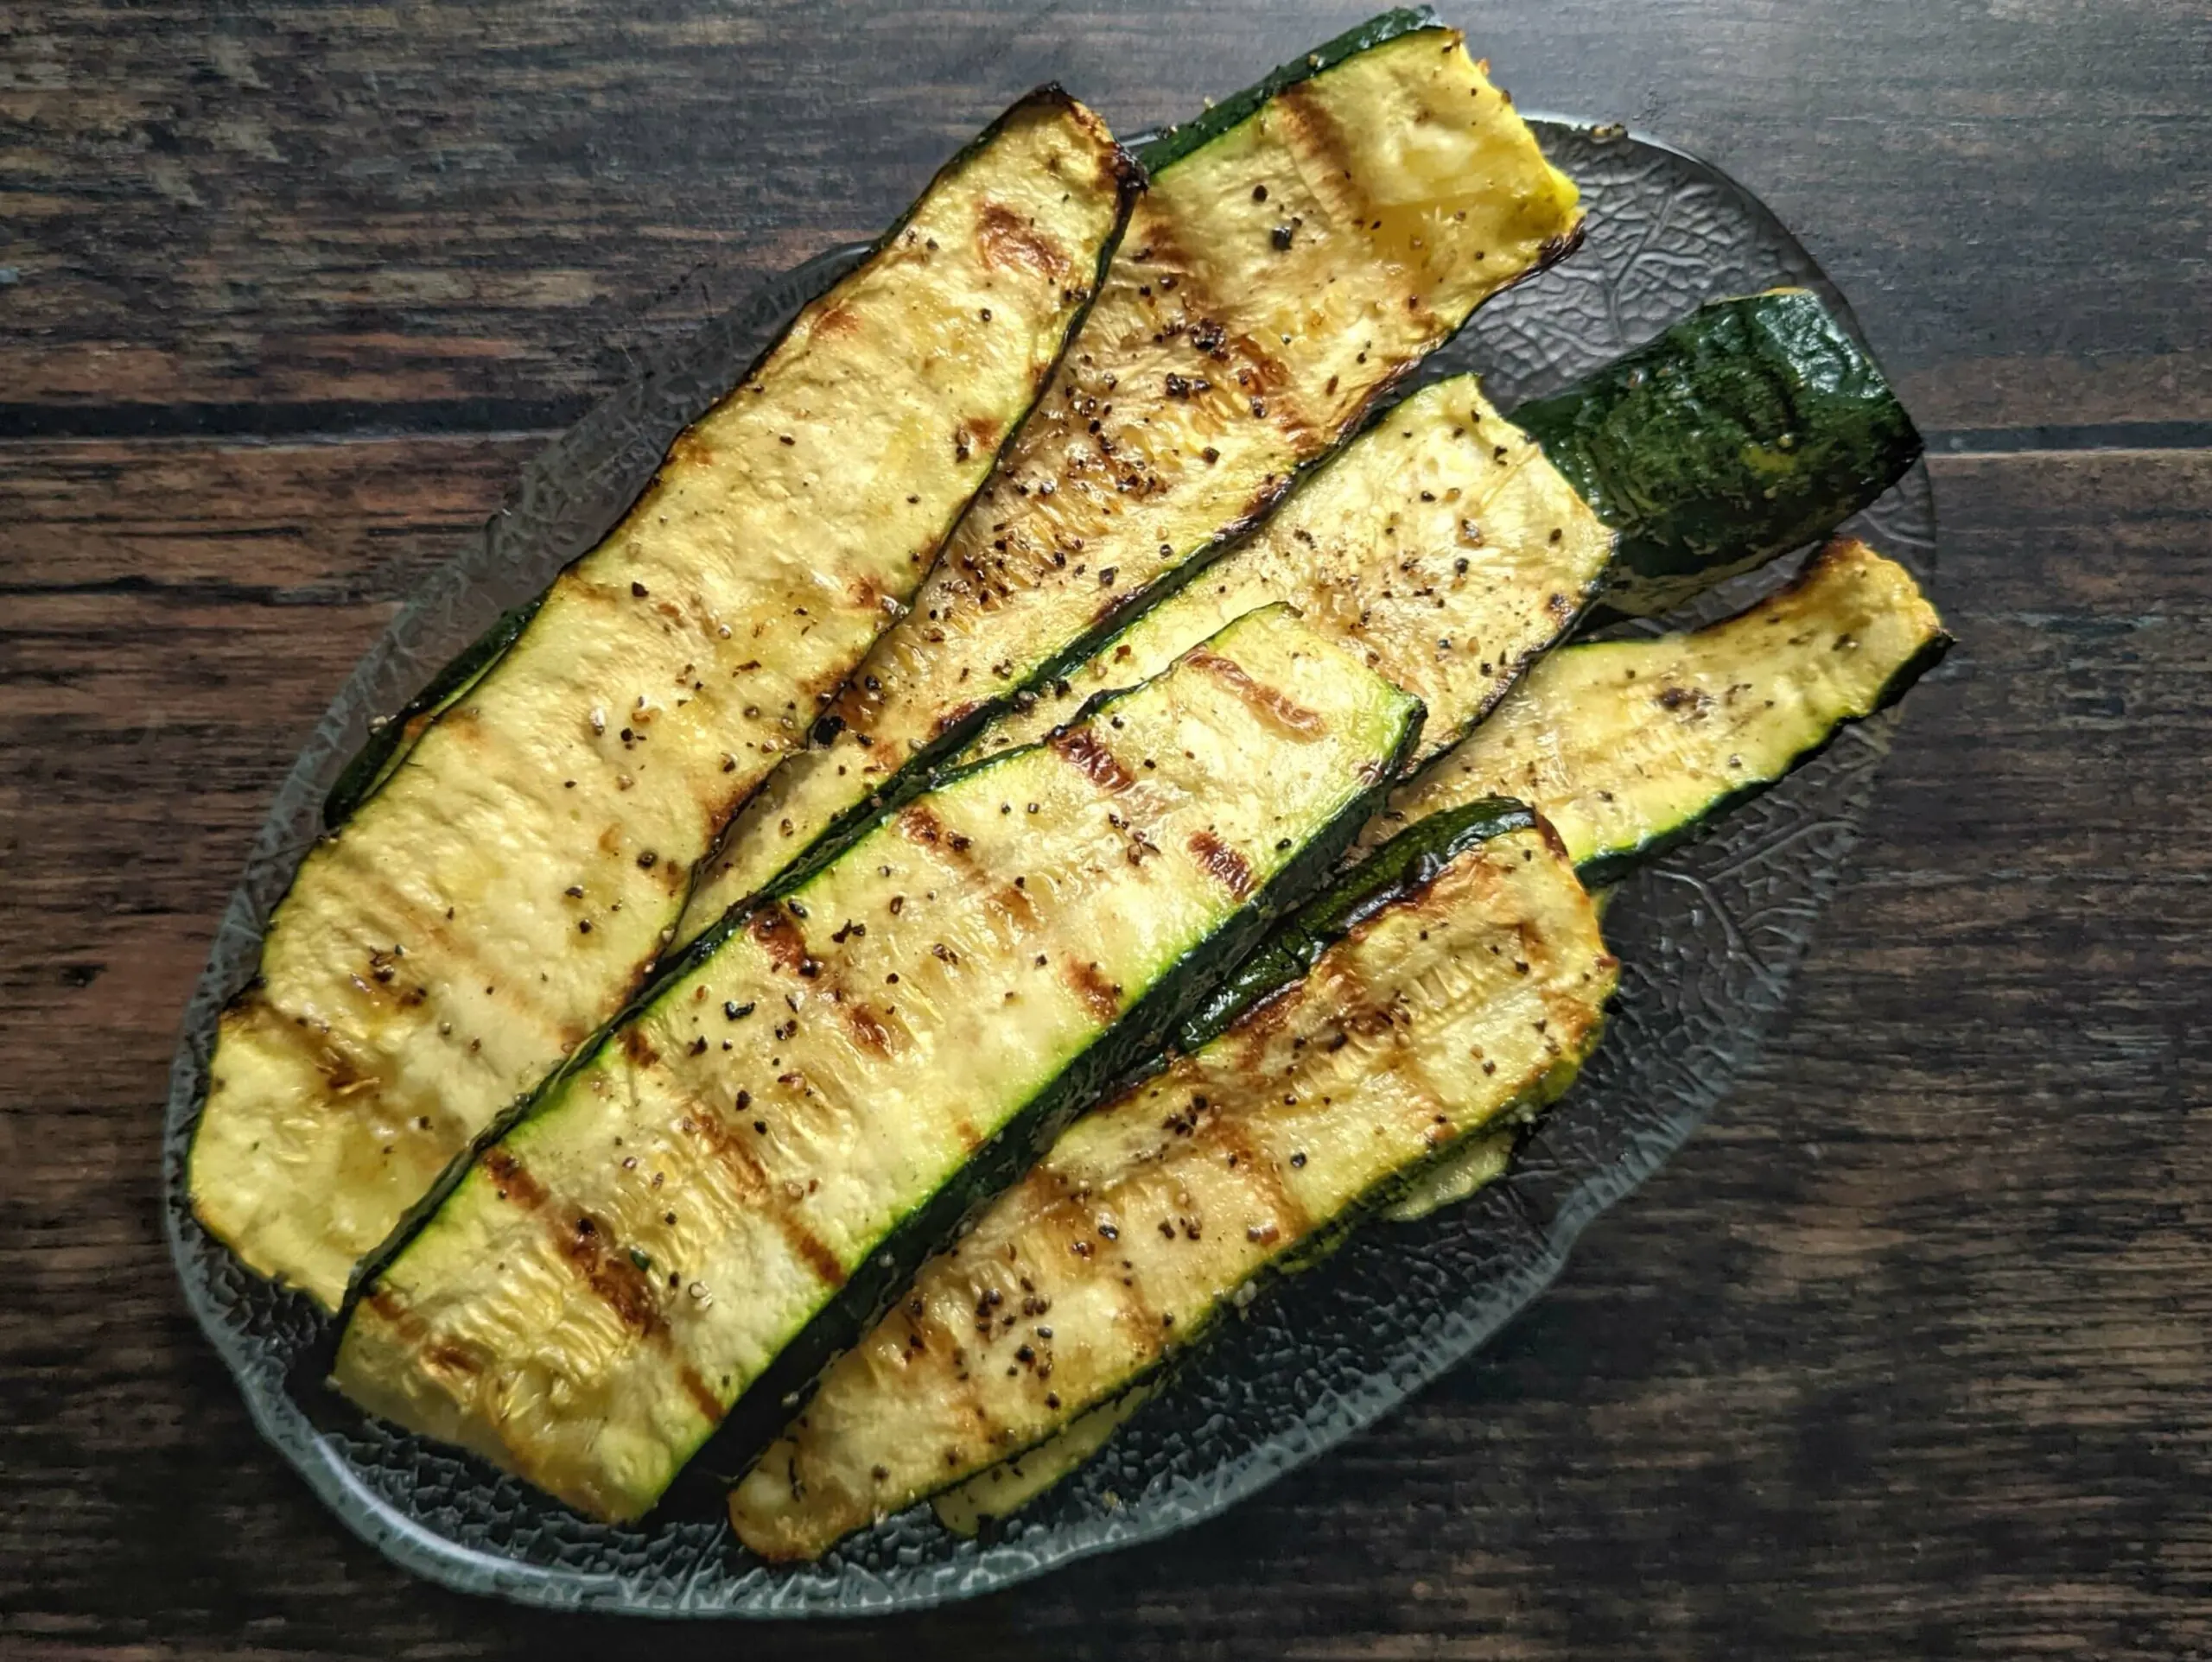 Grilled zucchini in a serving dish.